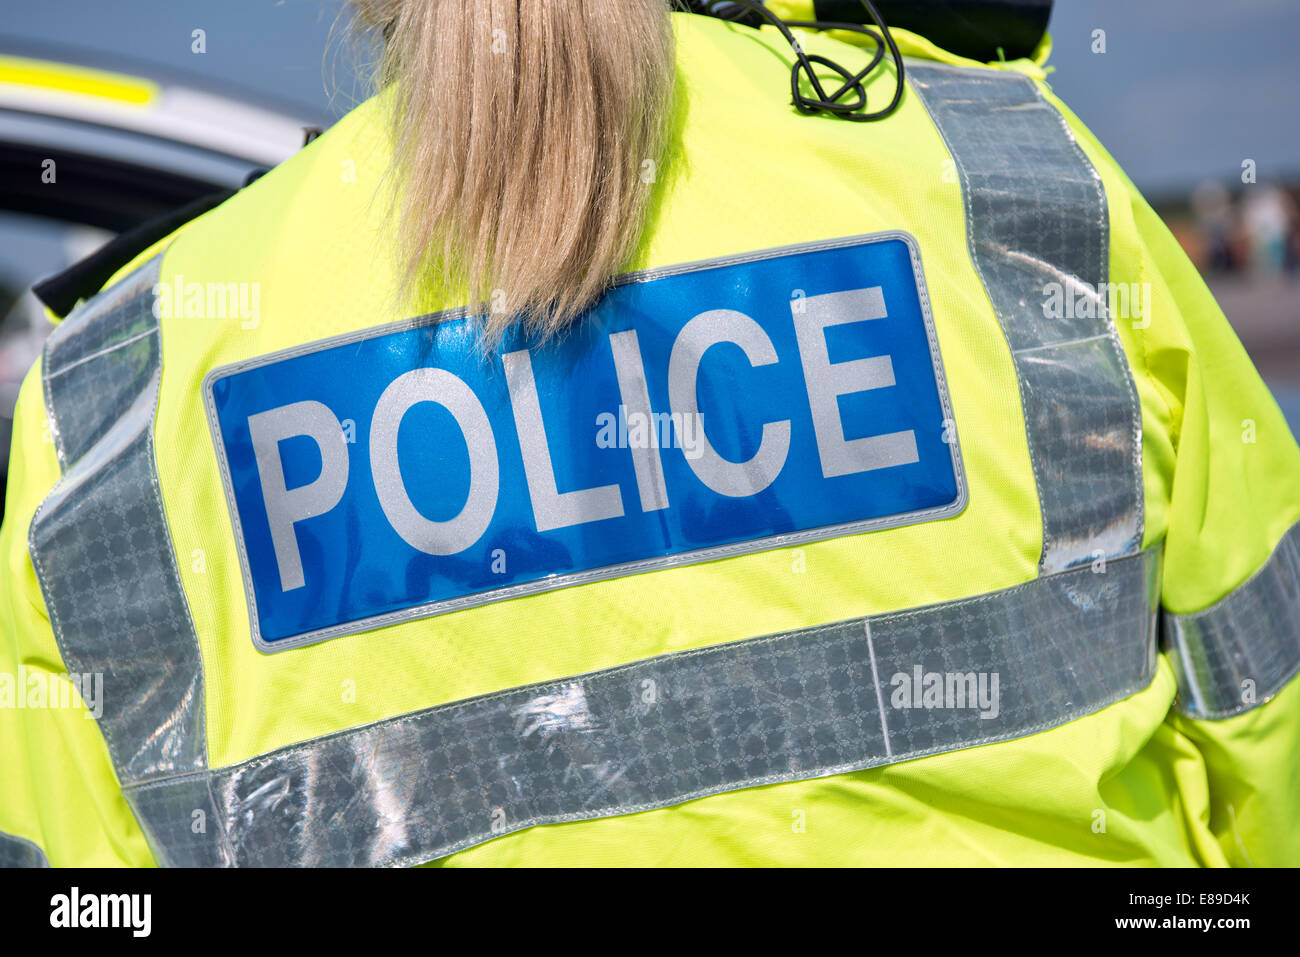 A female British police officer wearing a uniform hi vis reflective safety jacket Stock Photo